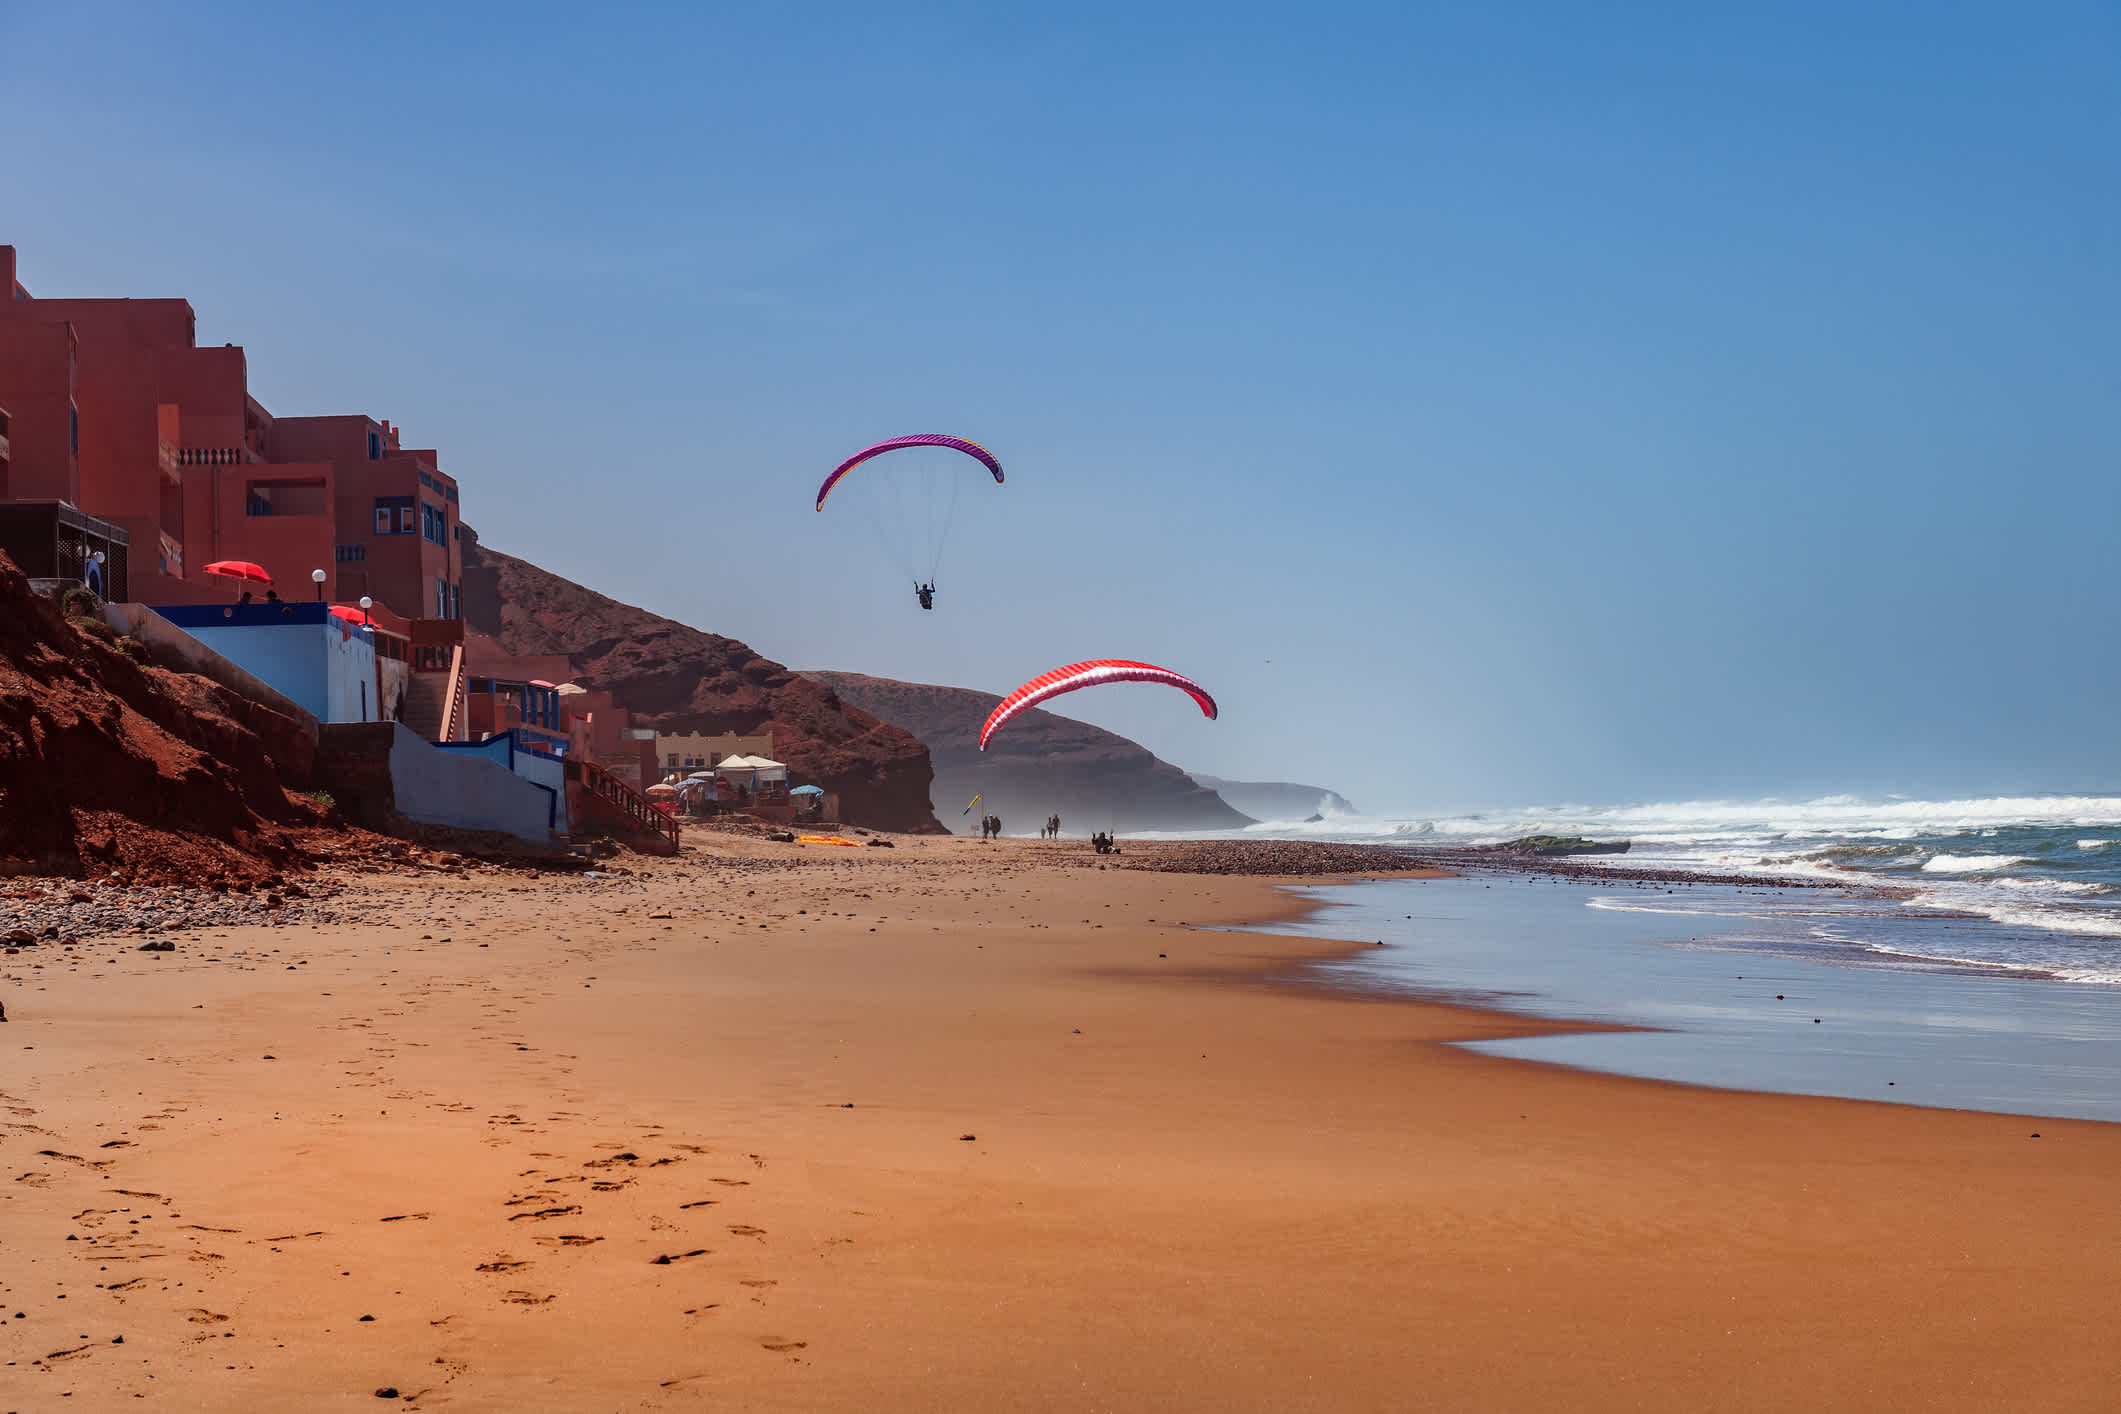 Parachutistes au bord de la plage sur la côte de Sidi Ifni, Maroc
